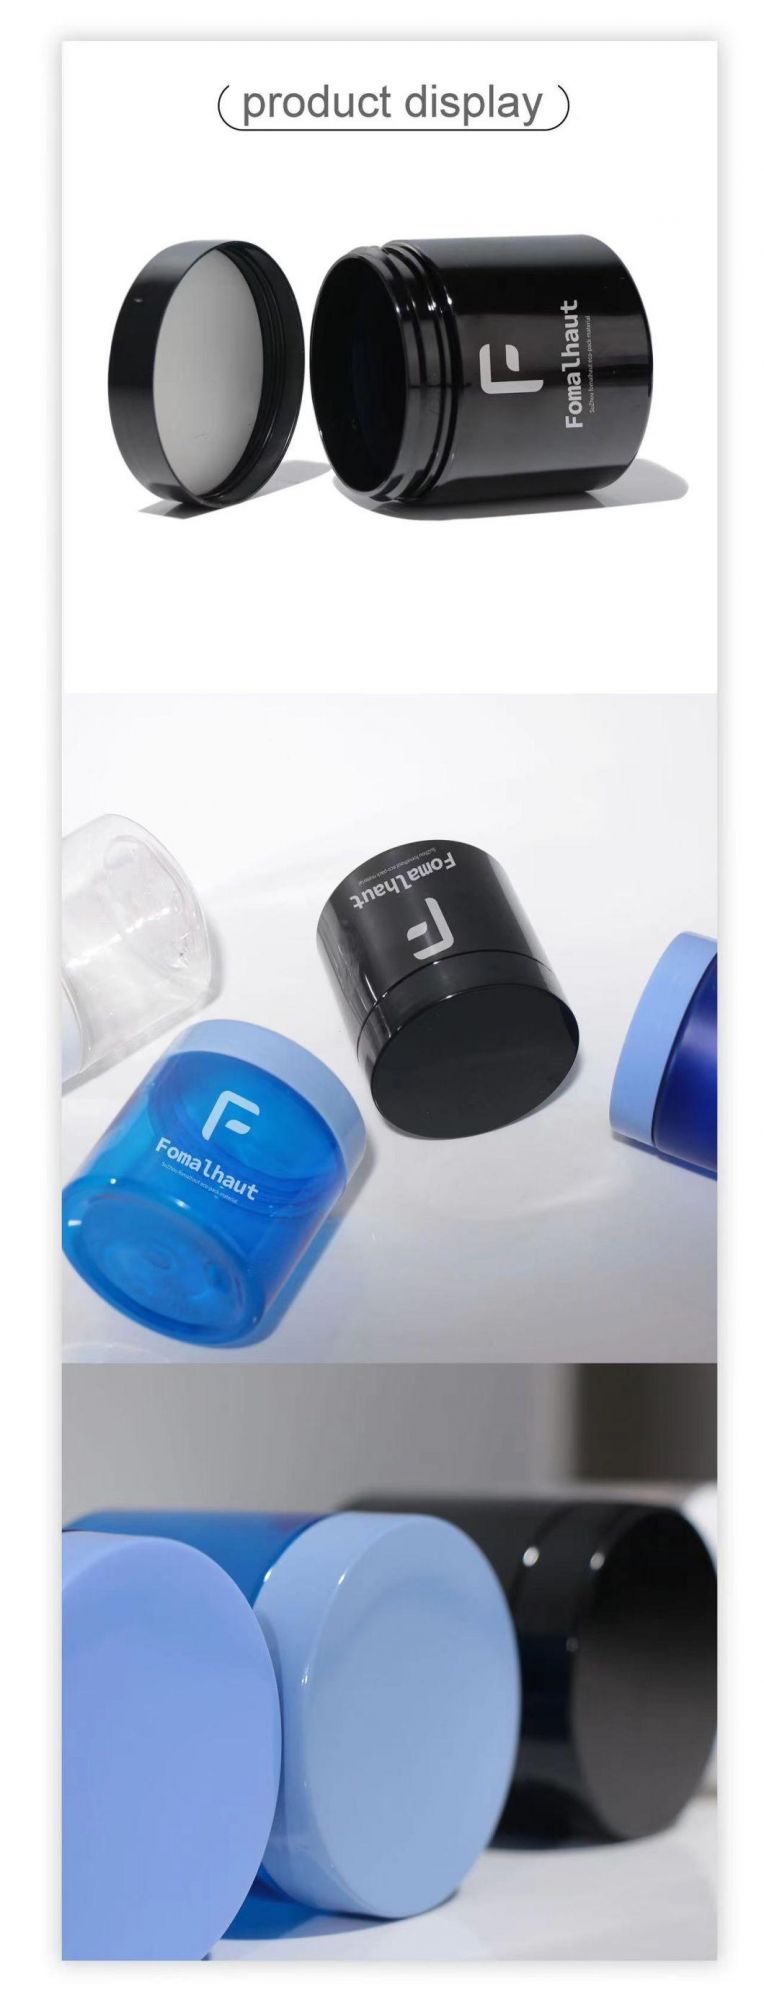 Fomalhaut Free Sample 200ml 250ml Cosmetic Pet Plastic Jar